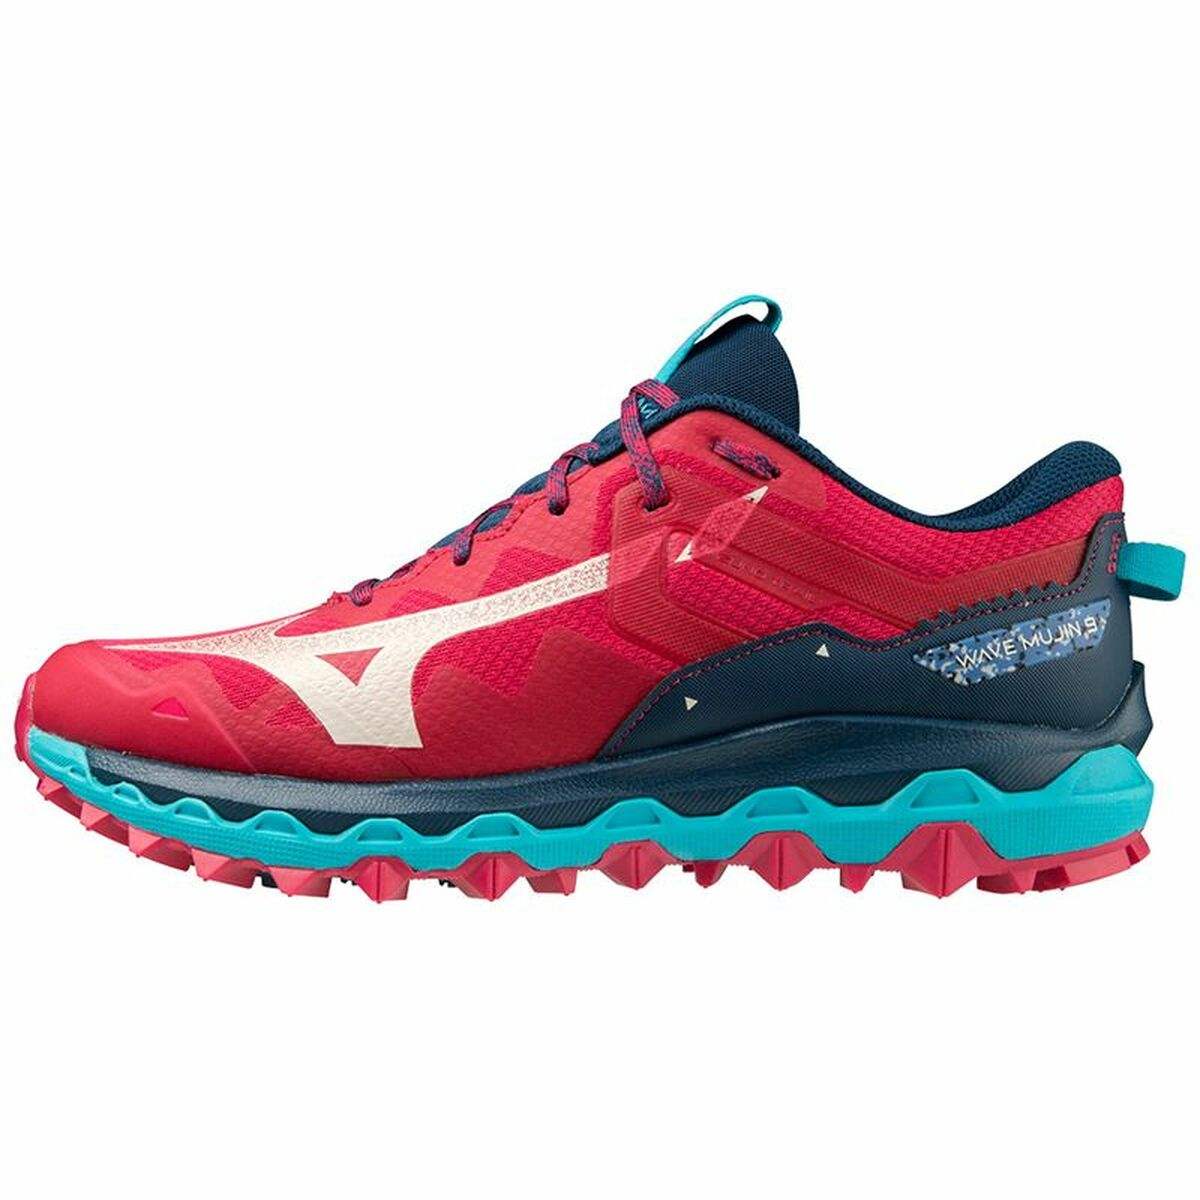 Chaussures de sport pour femme Mizuno Wave Mujin 9 Rouge - Mizuno - Jardin D'Eyden - jardindeyden.fr